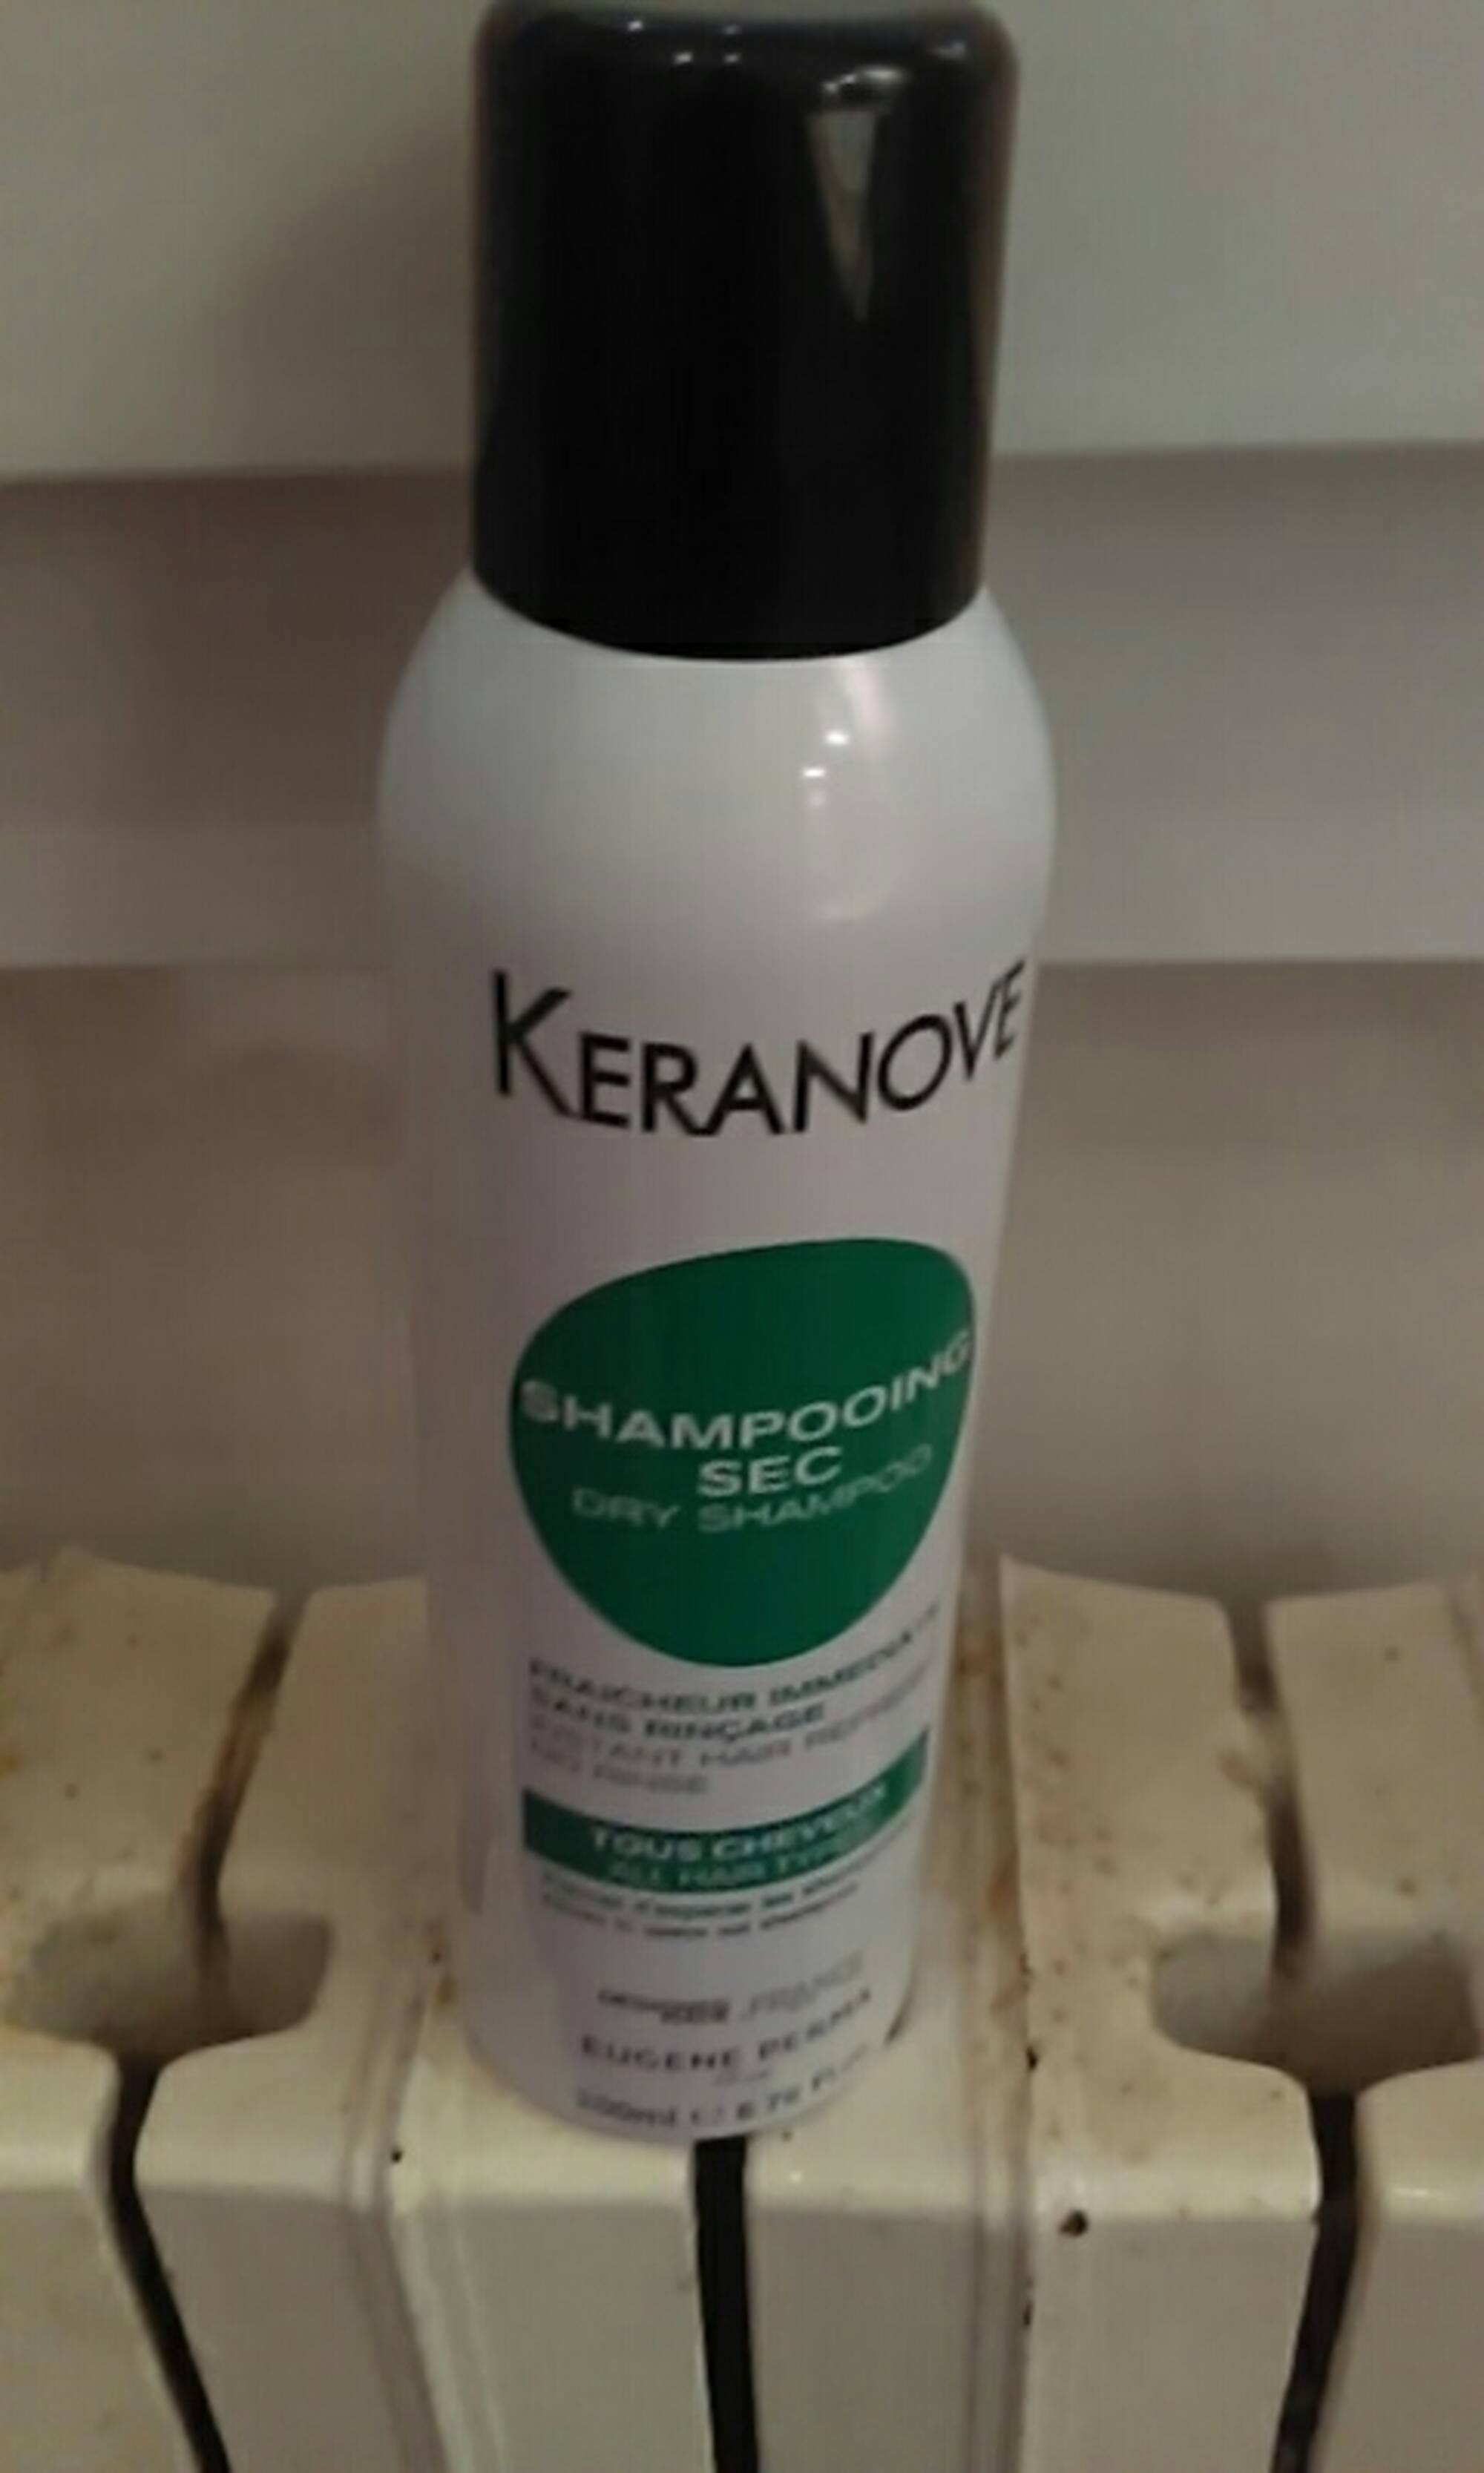 EUGÈNE PERMA - Keranove - Shampooing sec